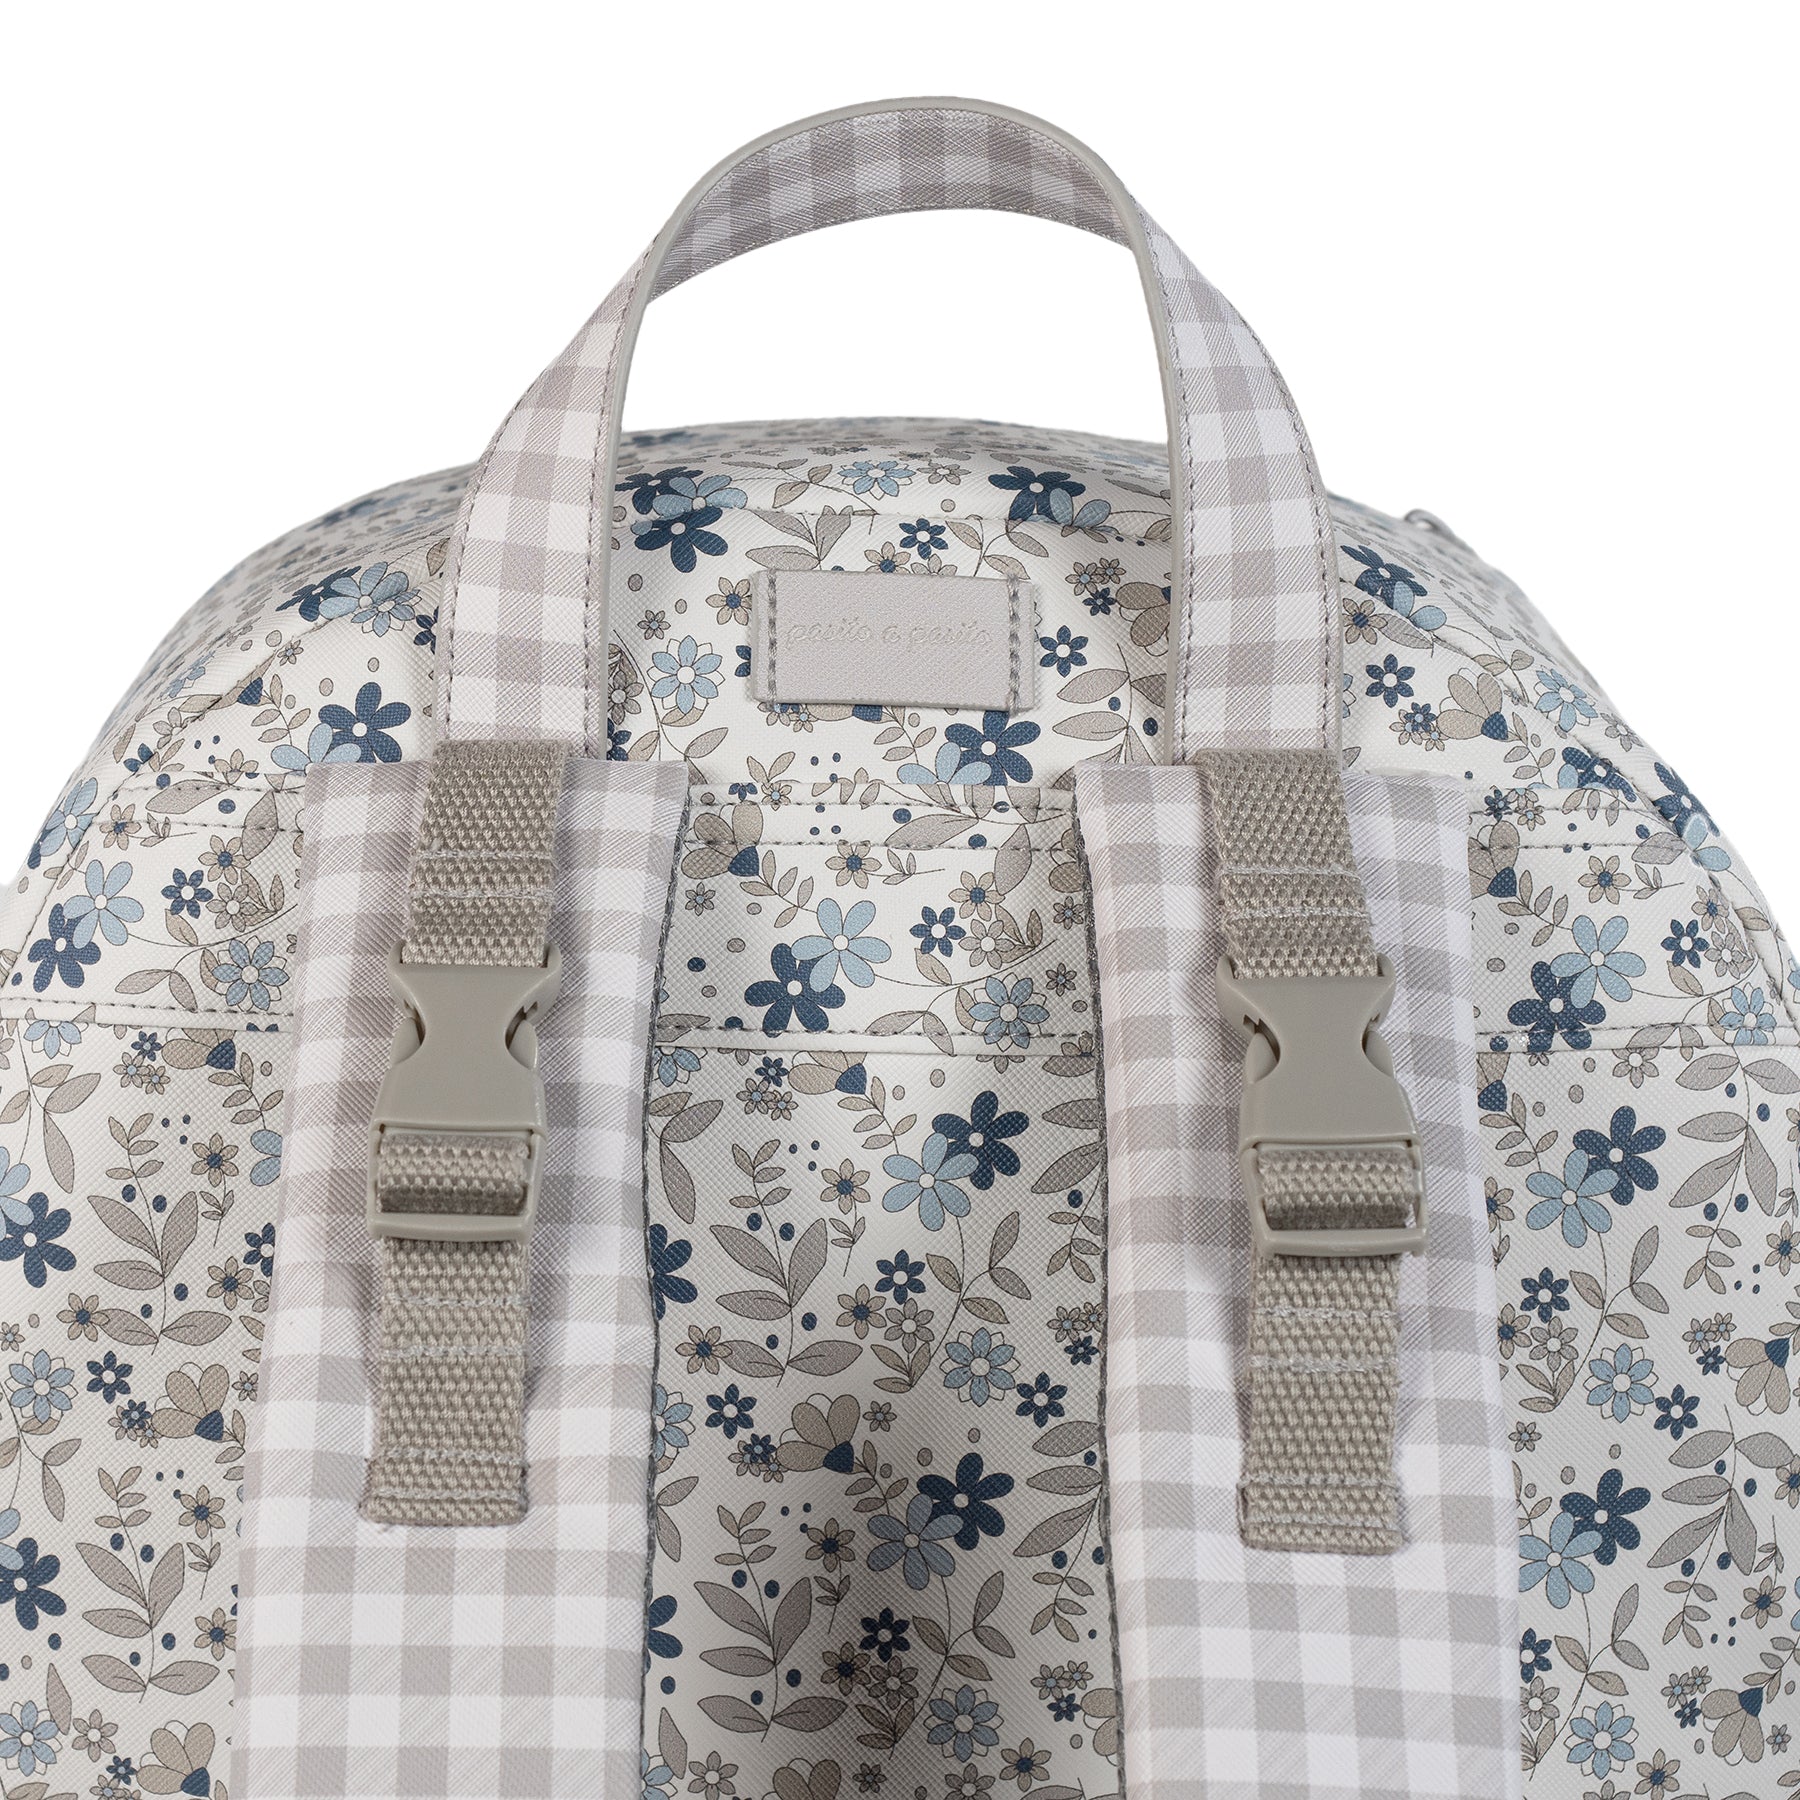 Pasito a Pasito Delia Blue Backpack Diaper Changing Bag